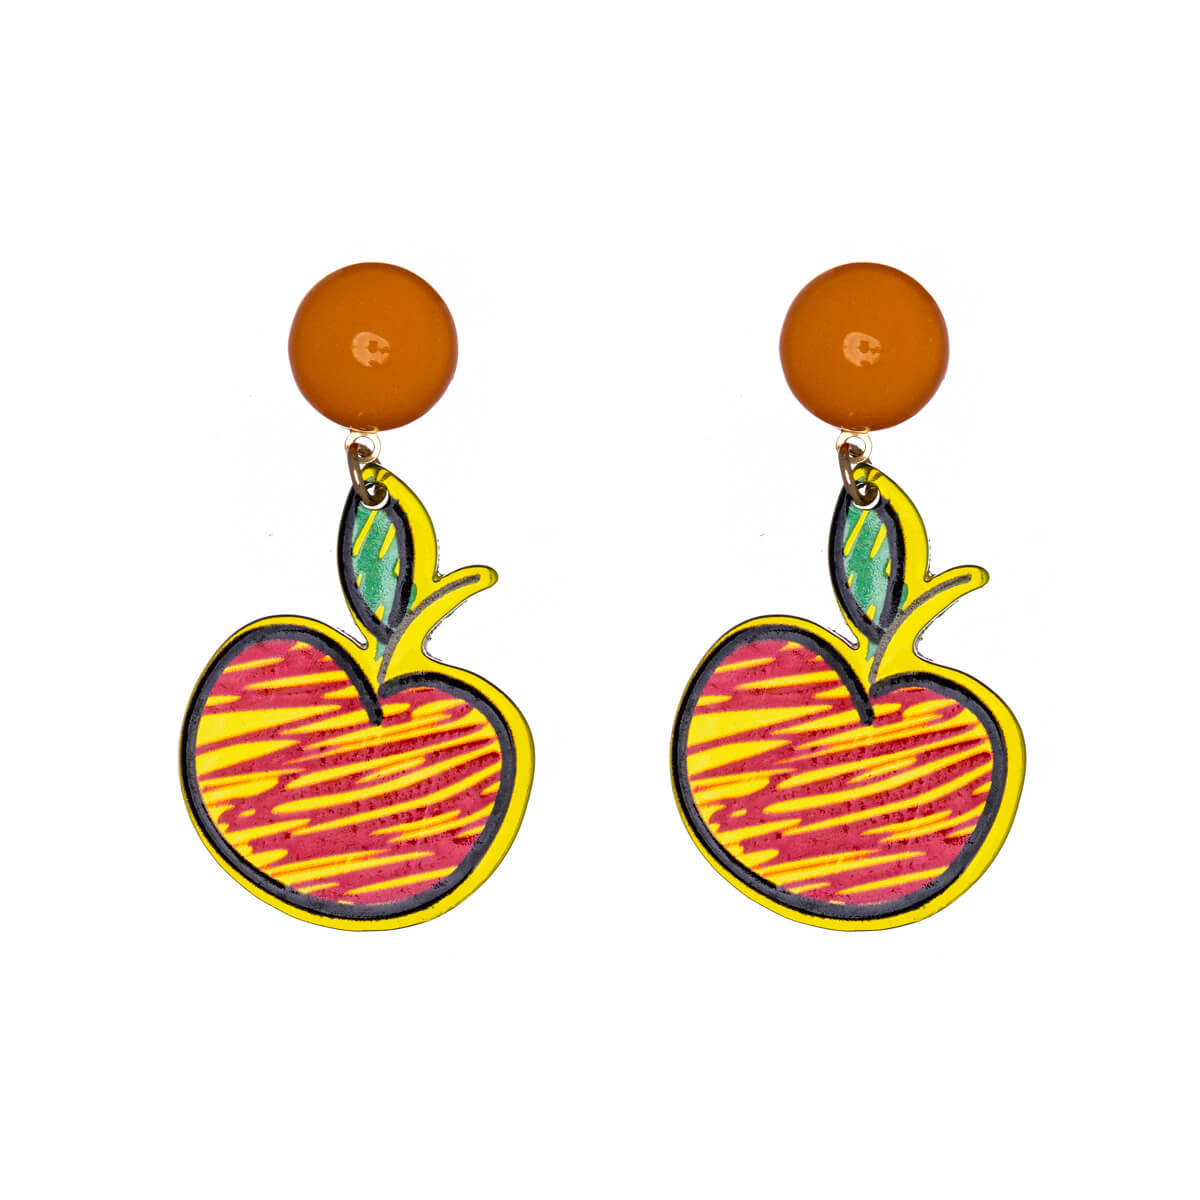 Plastic apple earrings